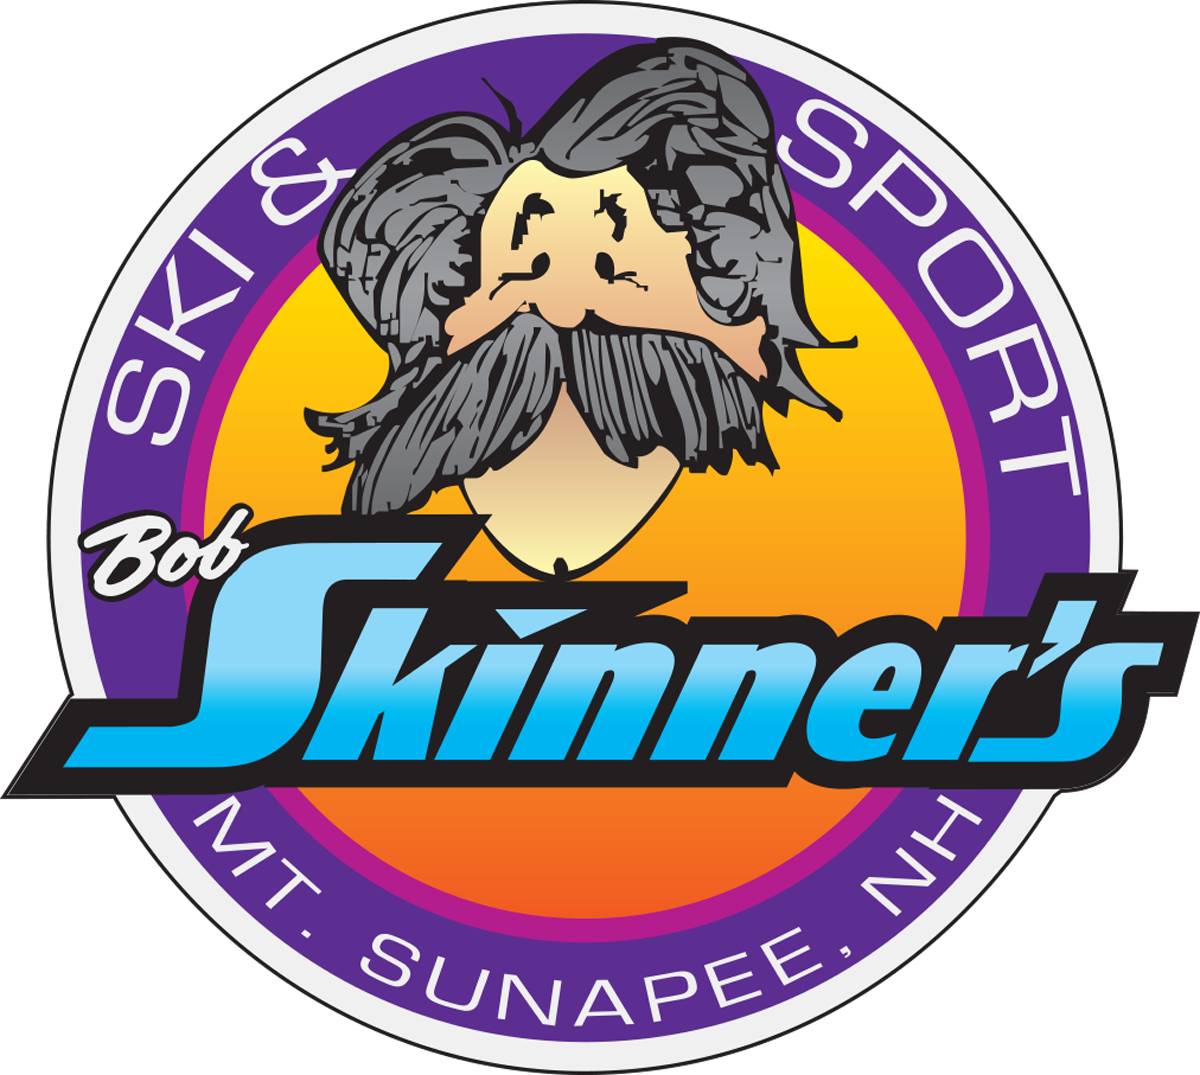 Bob Skinner's Ski and Sport